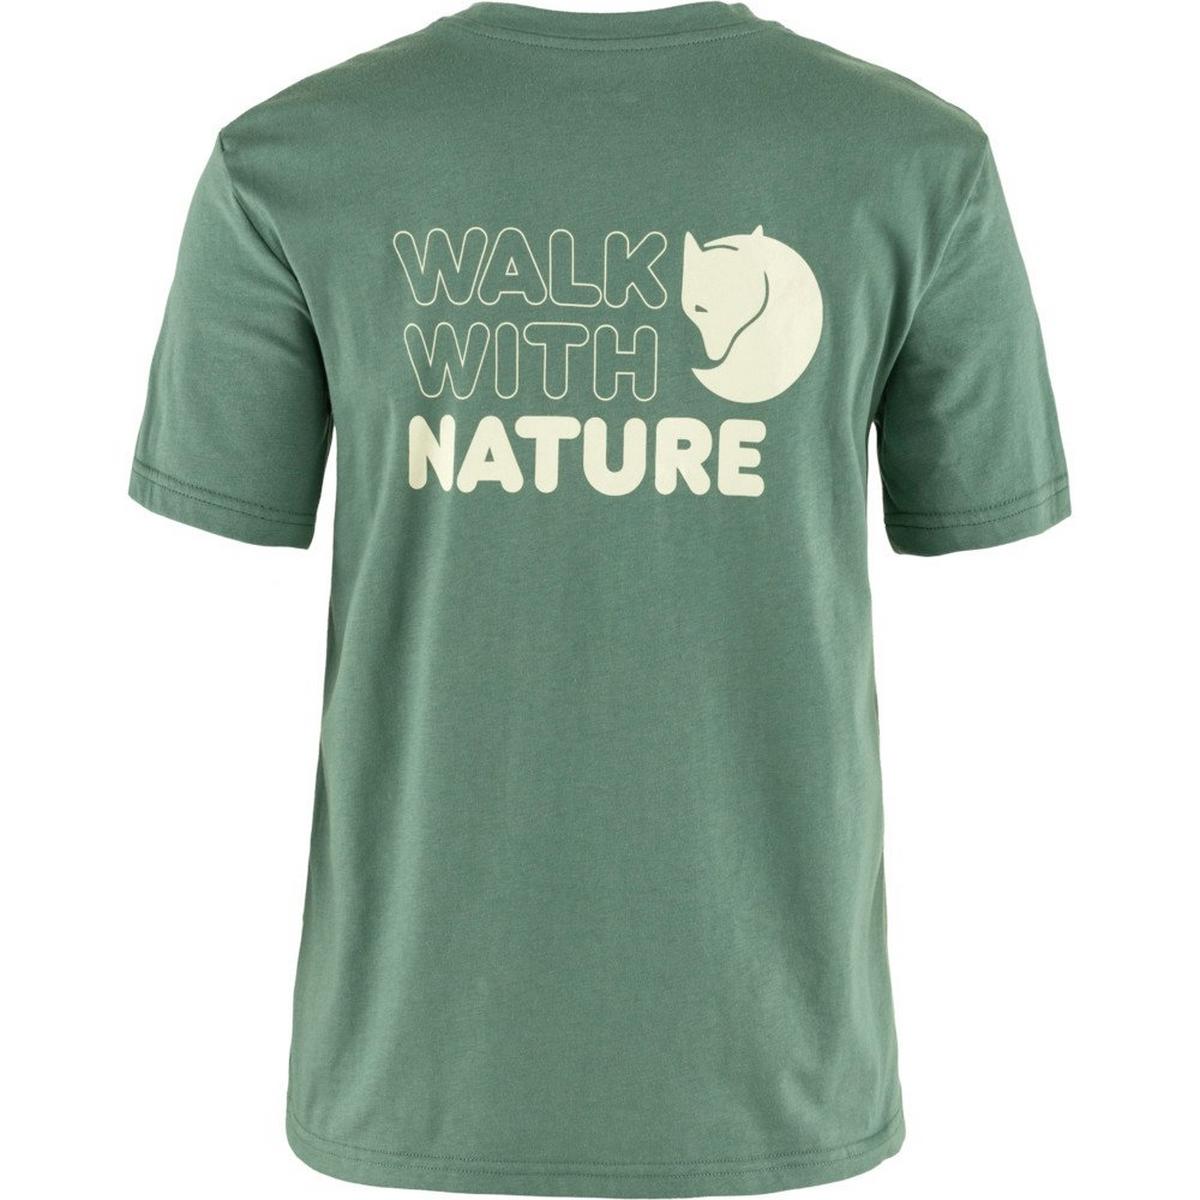 Fjallraven Women's Walk with Nature T-Shirt - Green